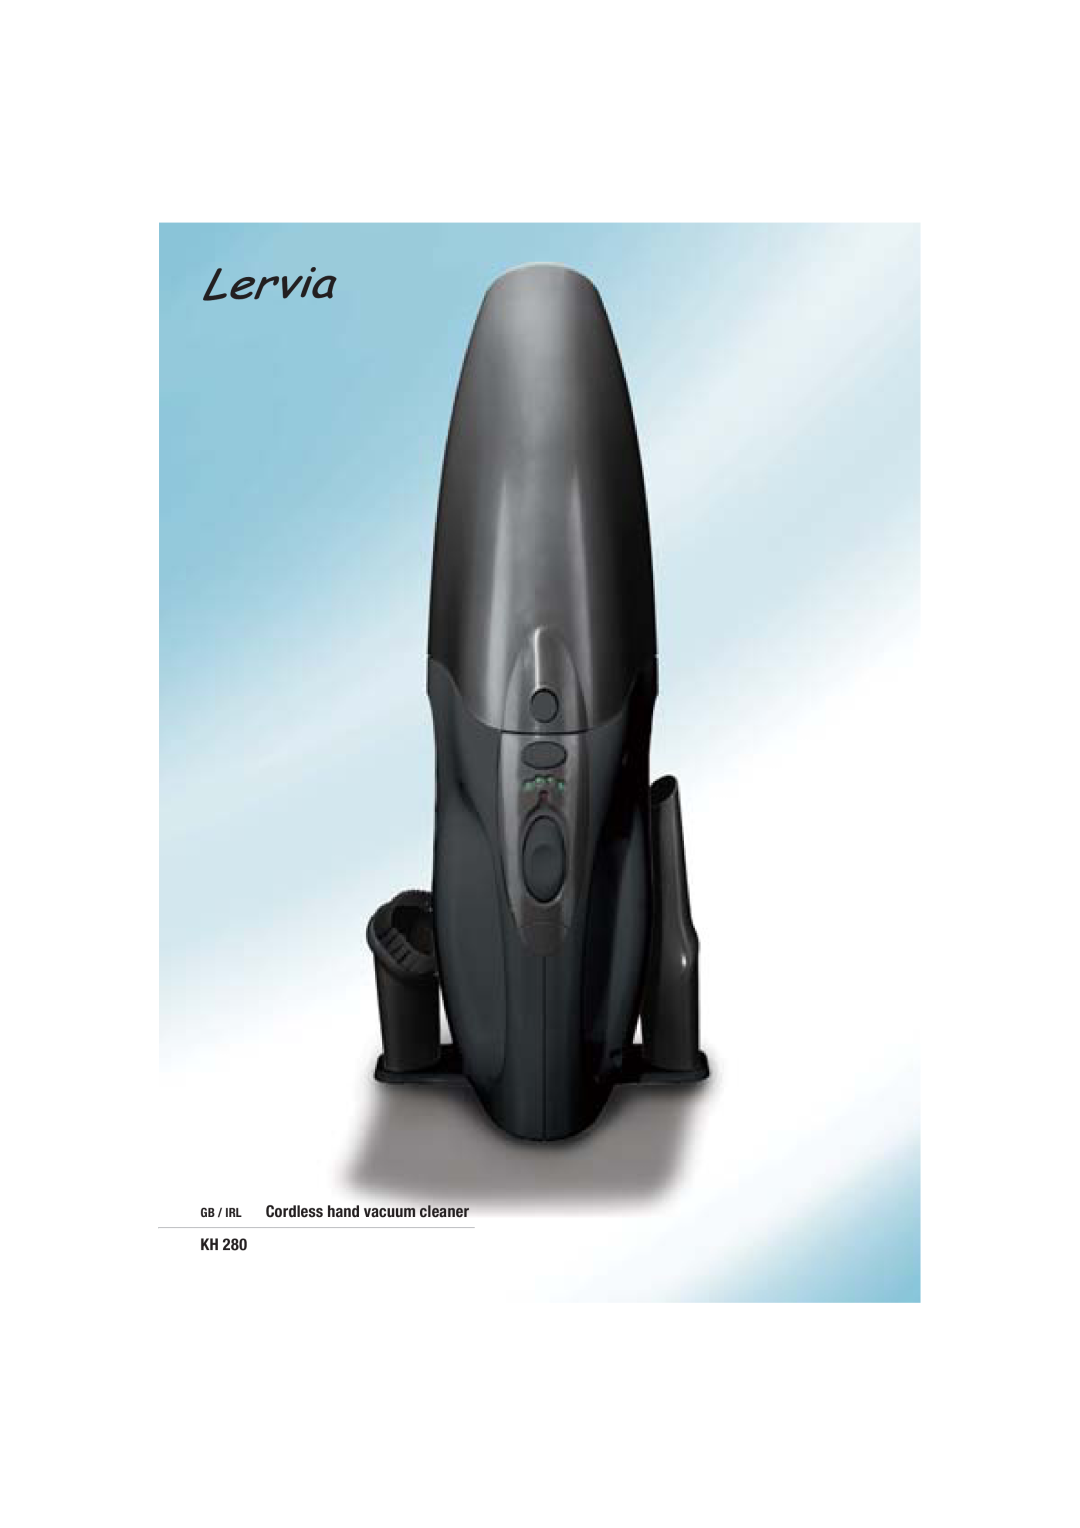 Kompernass KH 280 manual GB / IRL Cordless hand vacuum cleaner 